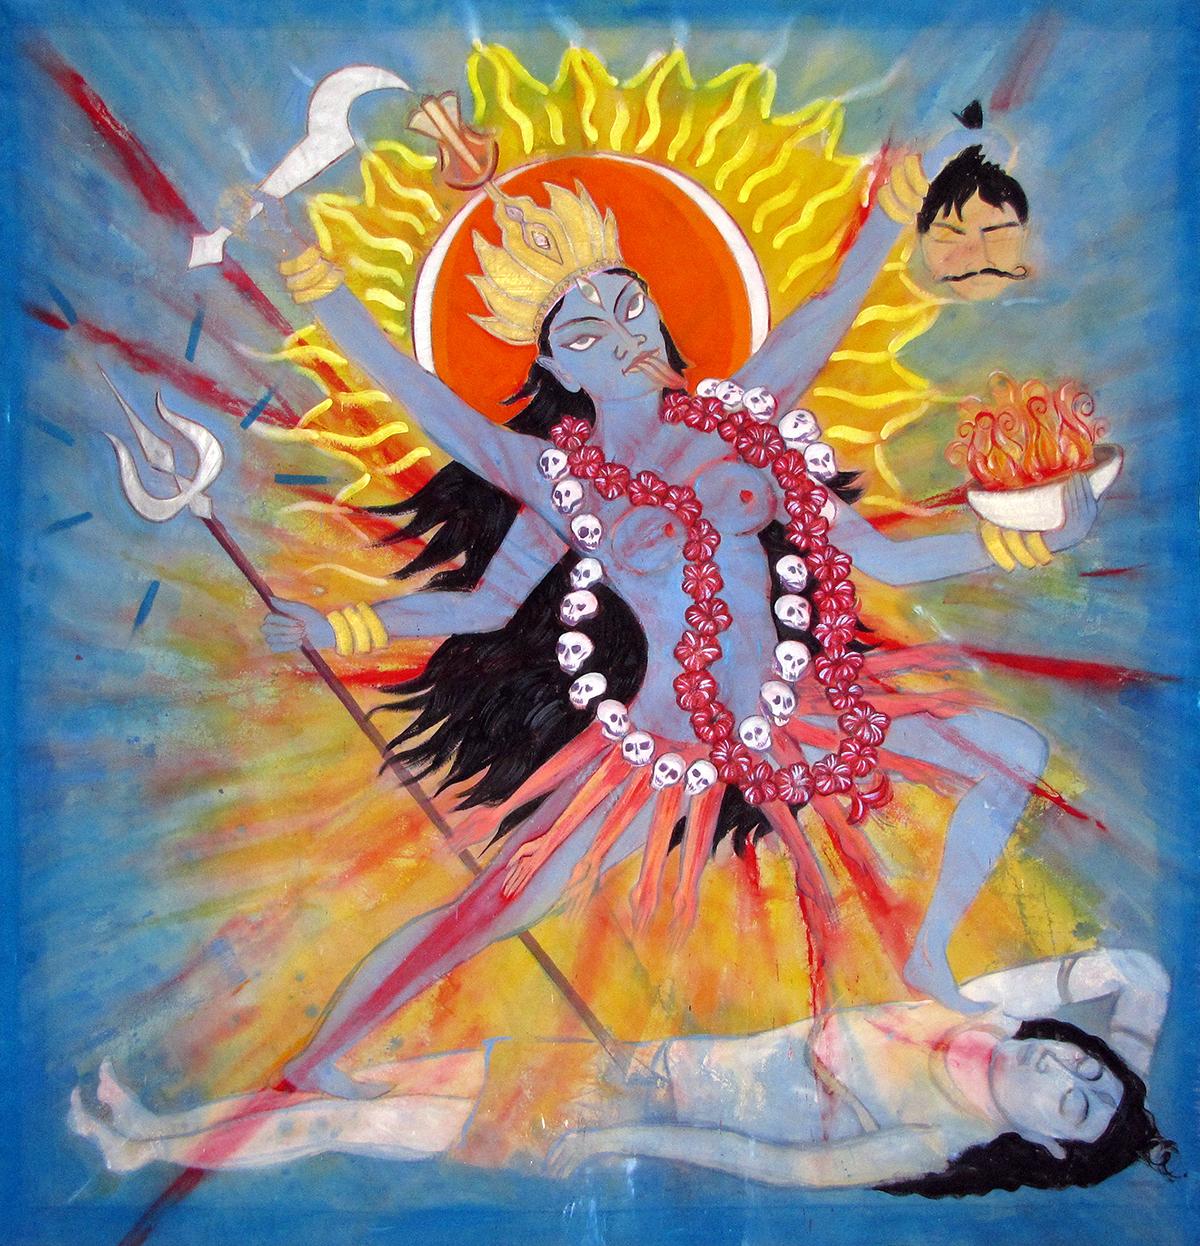 Kali, colorful, bold, spiritual, East Indian influence, fire, goddess